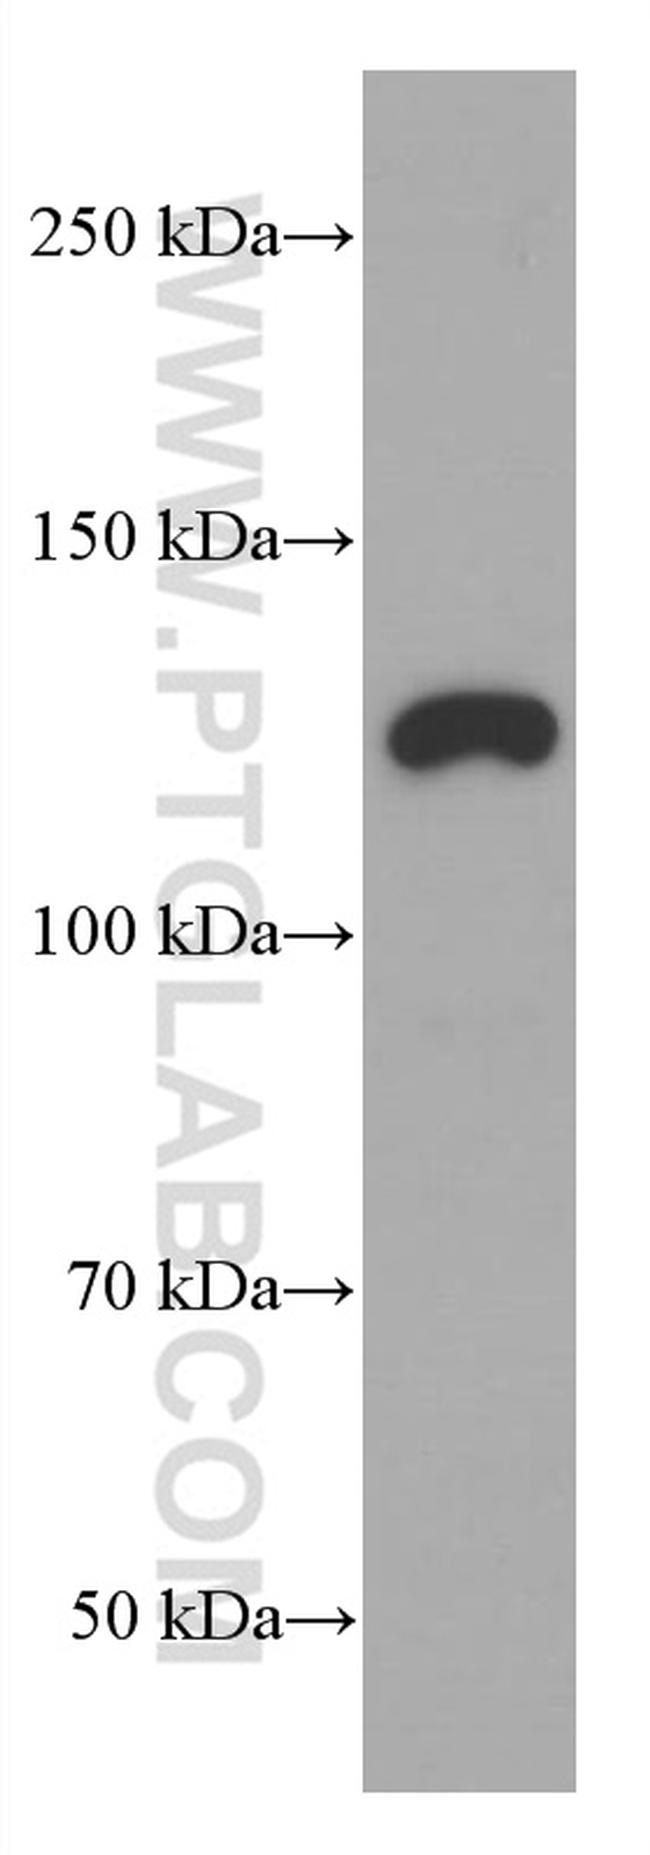 JAK1 Antibody in Western Blot (WB)